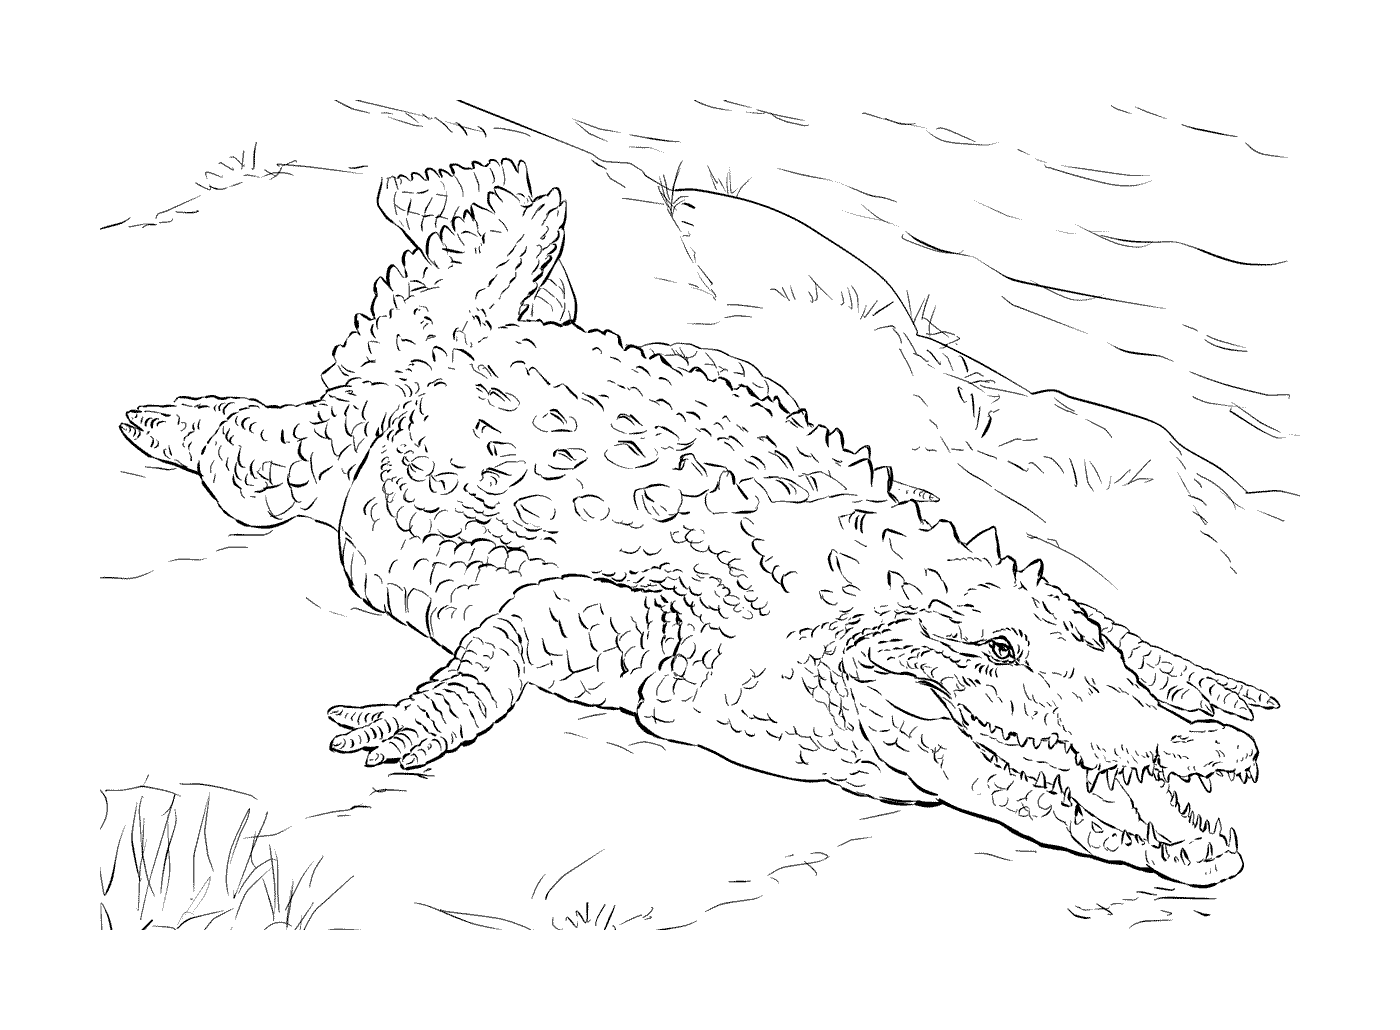  An American crocodile lying in the grass 